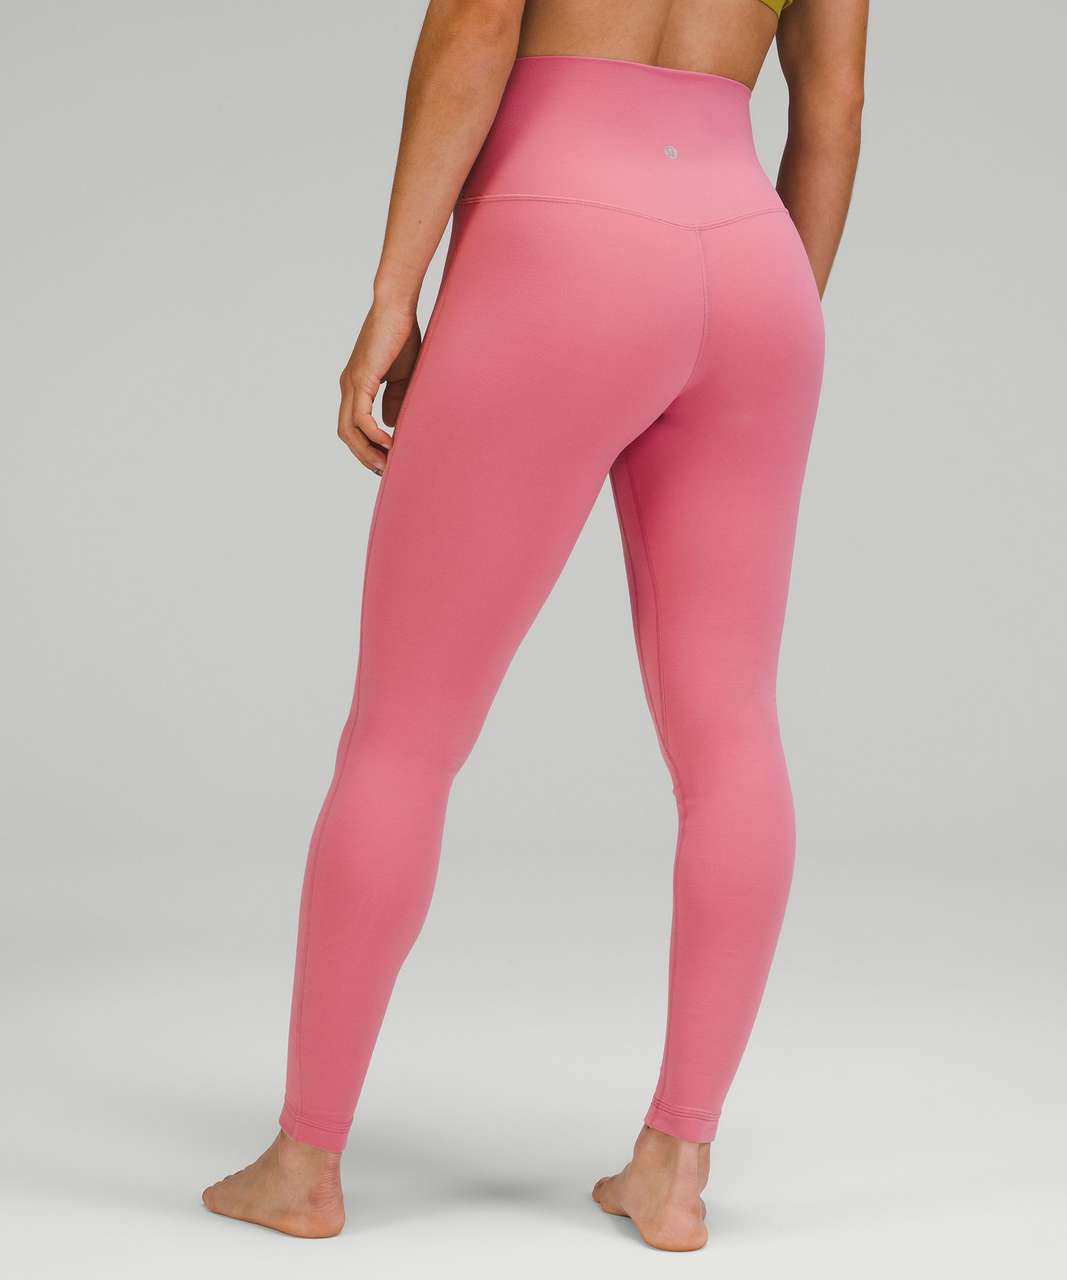 Lululemon Leggings Size 8 Black Pink Spots and 28 similar items